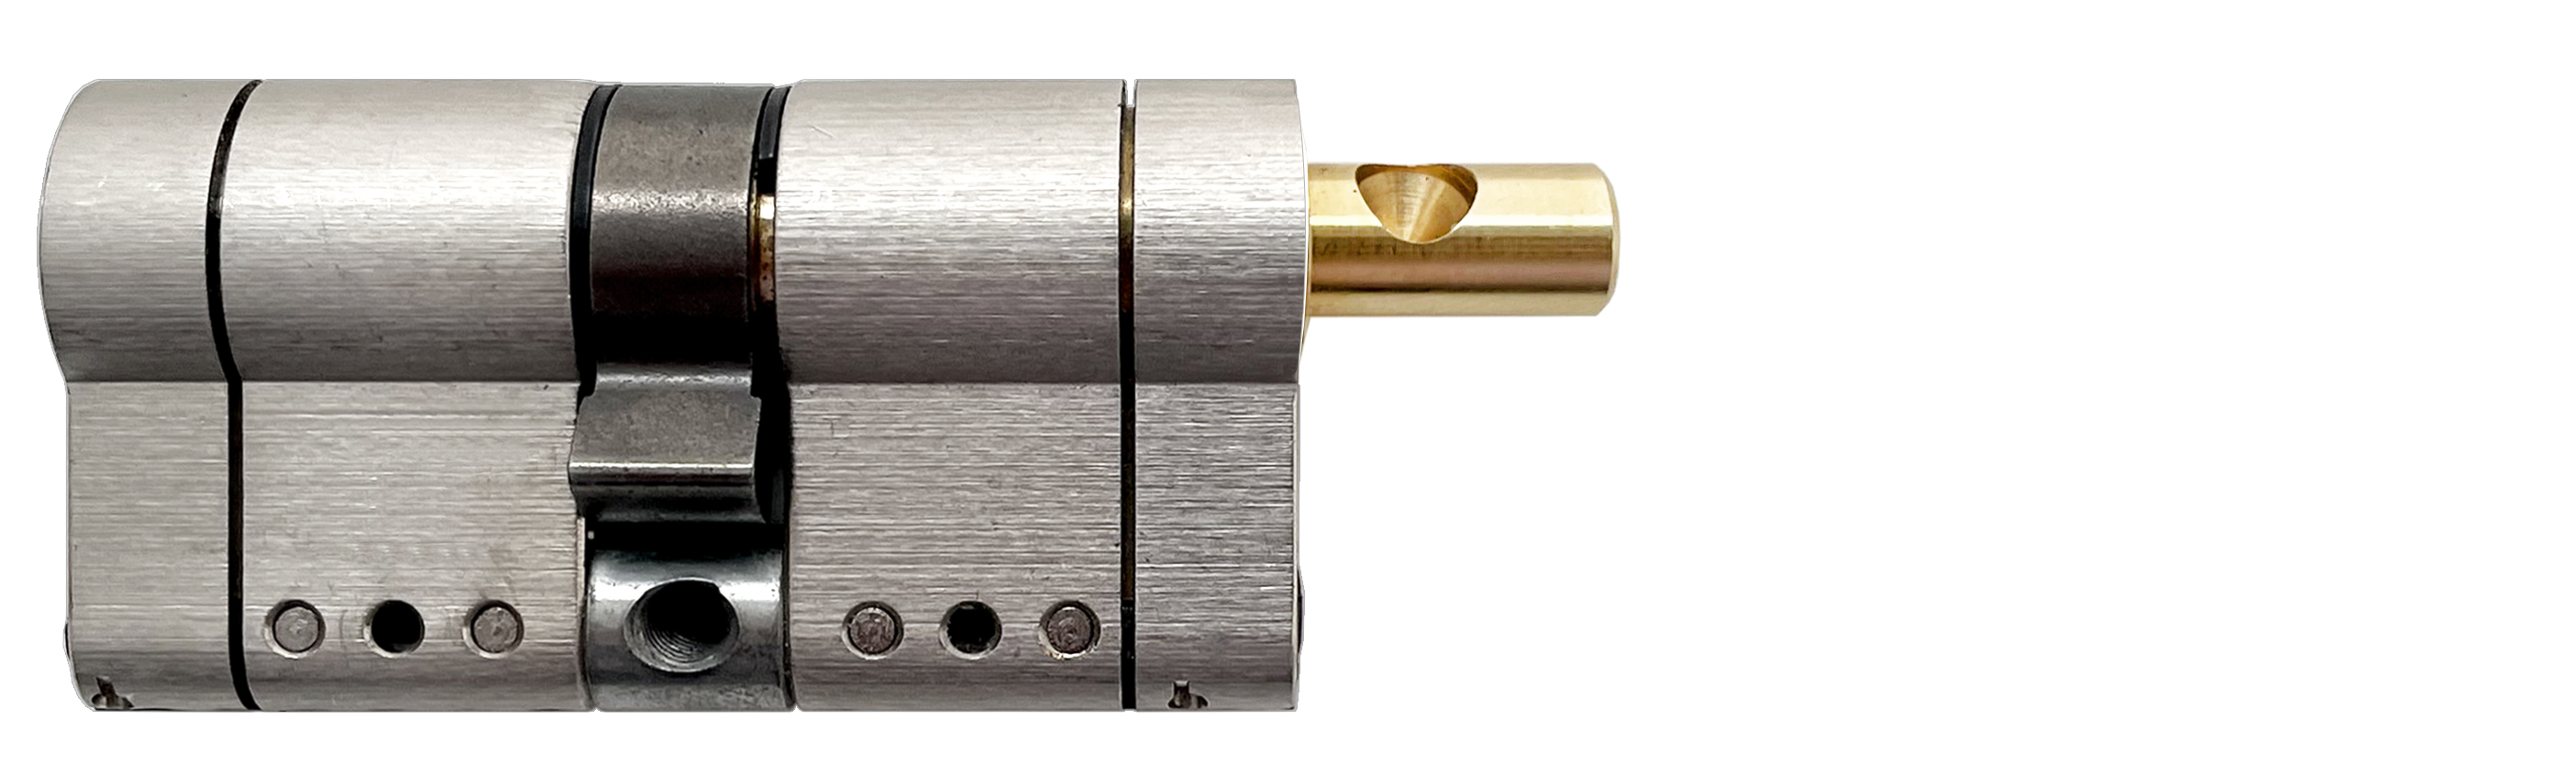 Цилиндр MOTTURA PRO 87(41+46)мм, ключ/вертушка, никель ключ для заглушки поддона картера станкоимпорт